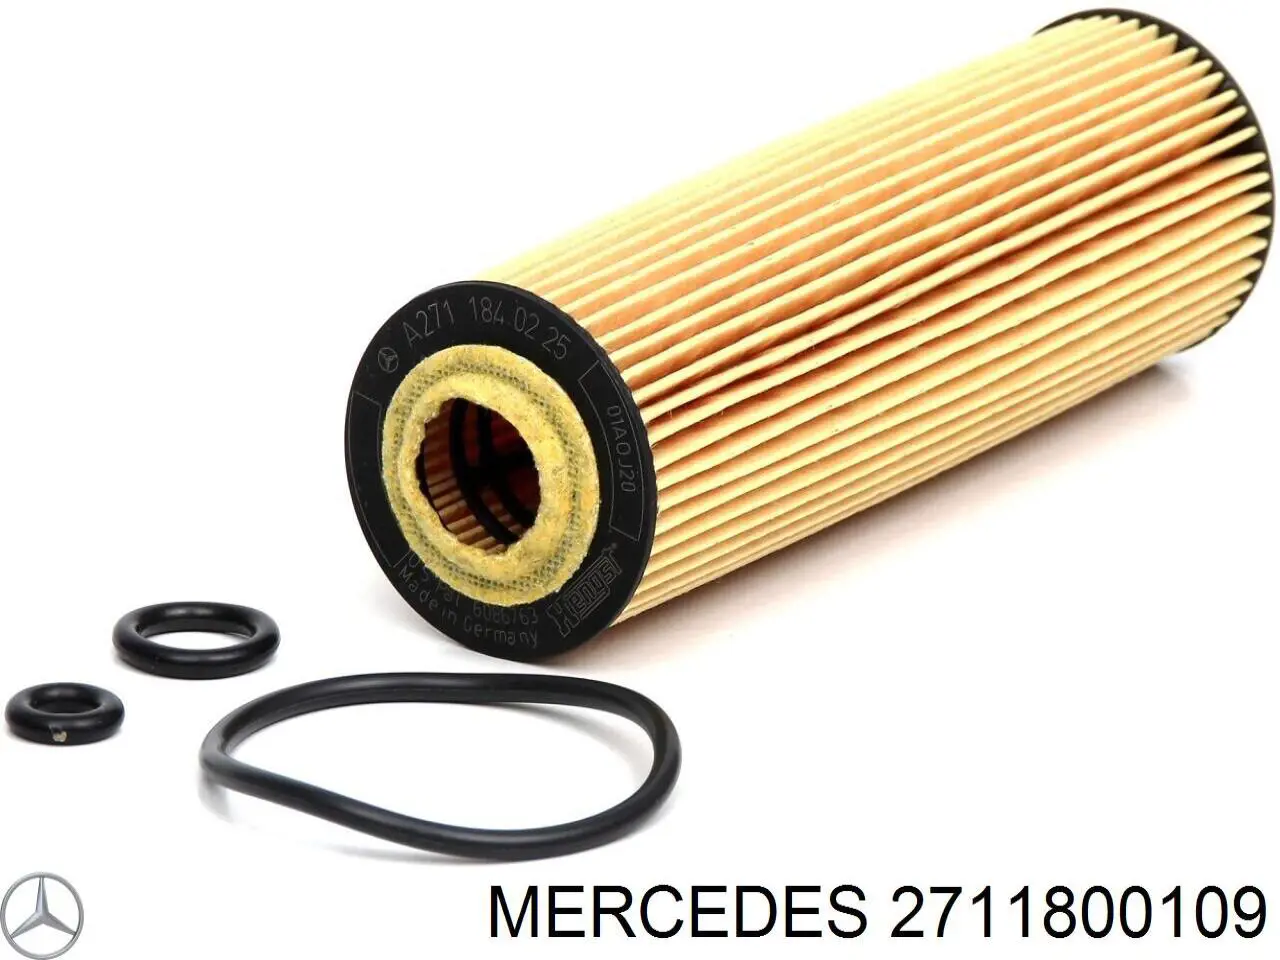 2711800109 Mercedes filtro de aceite